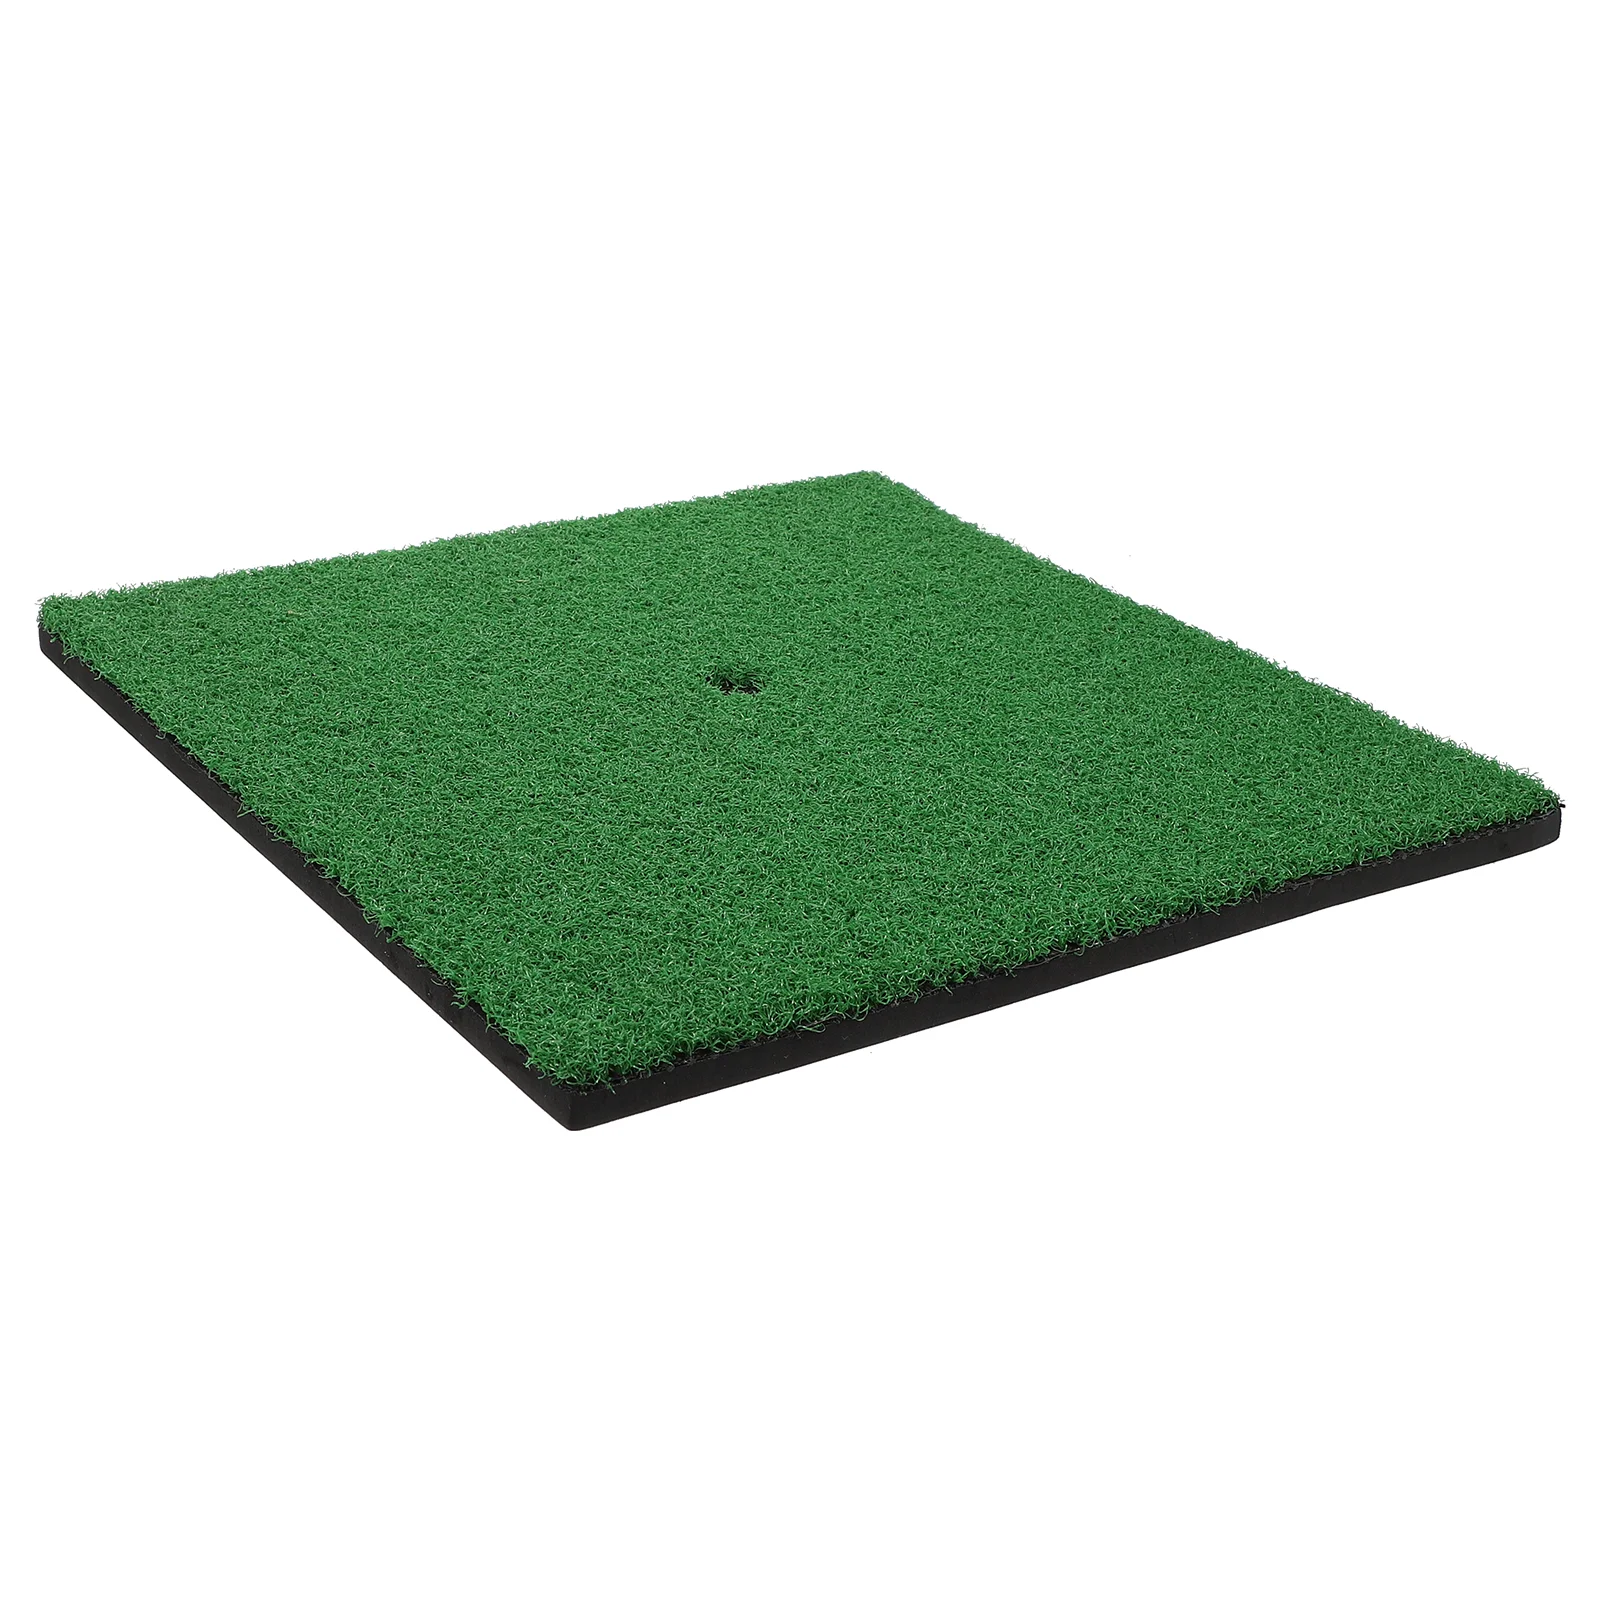 

Mat Putting Practice Golfing Hitting Training Turf Mats Outdoor Rug Home Pad Artificial Green Indoor Grass Swing Plastic Mini